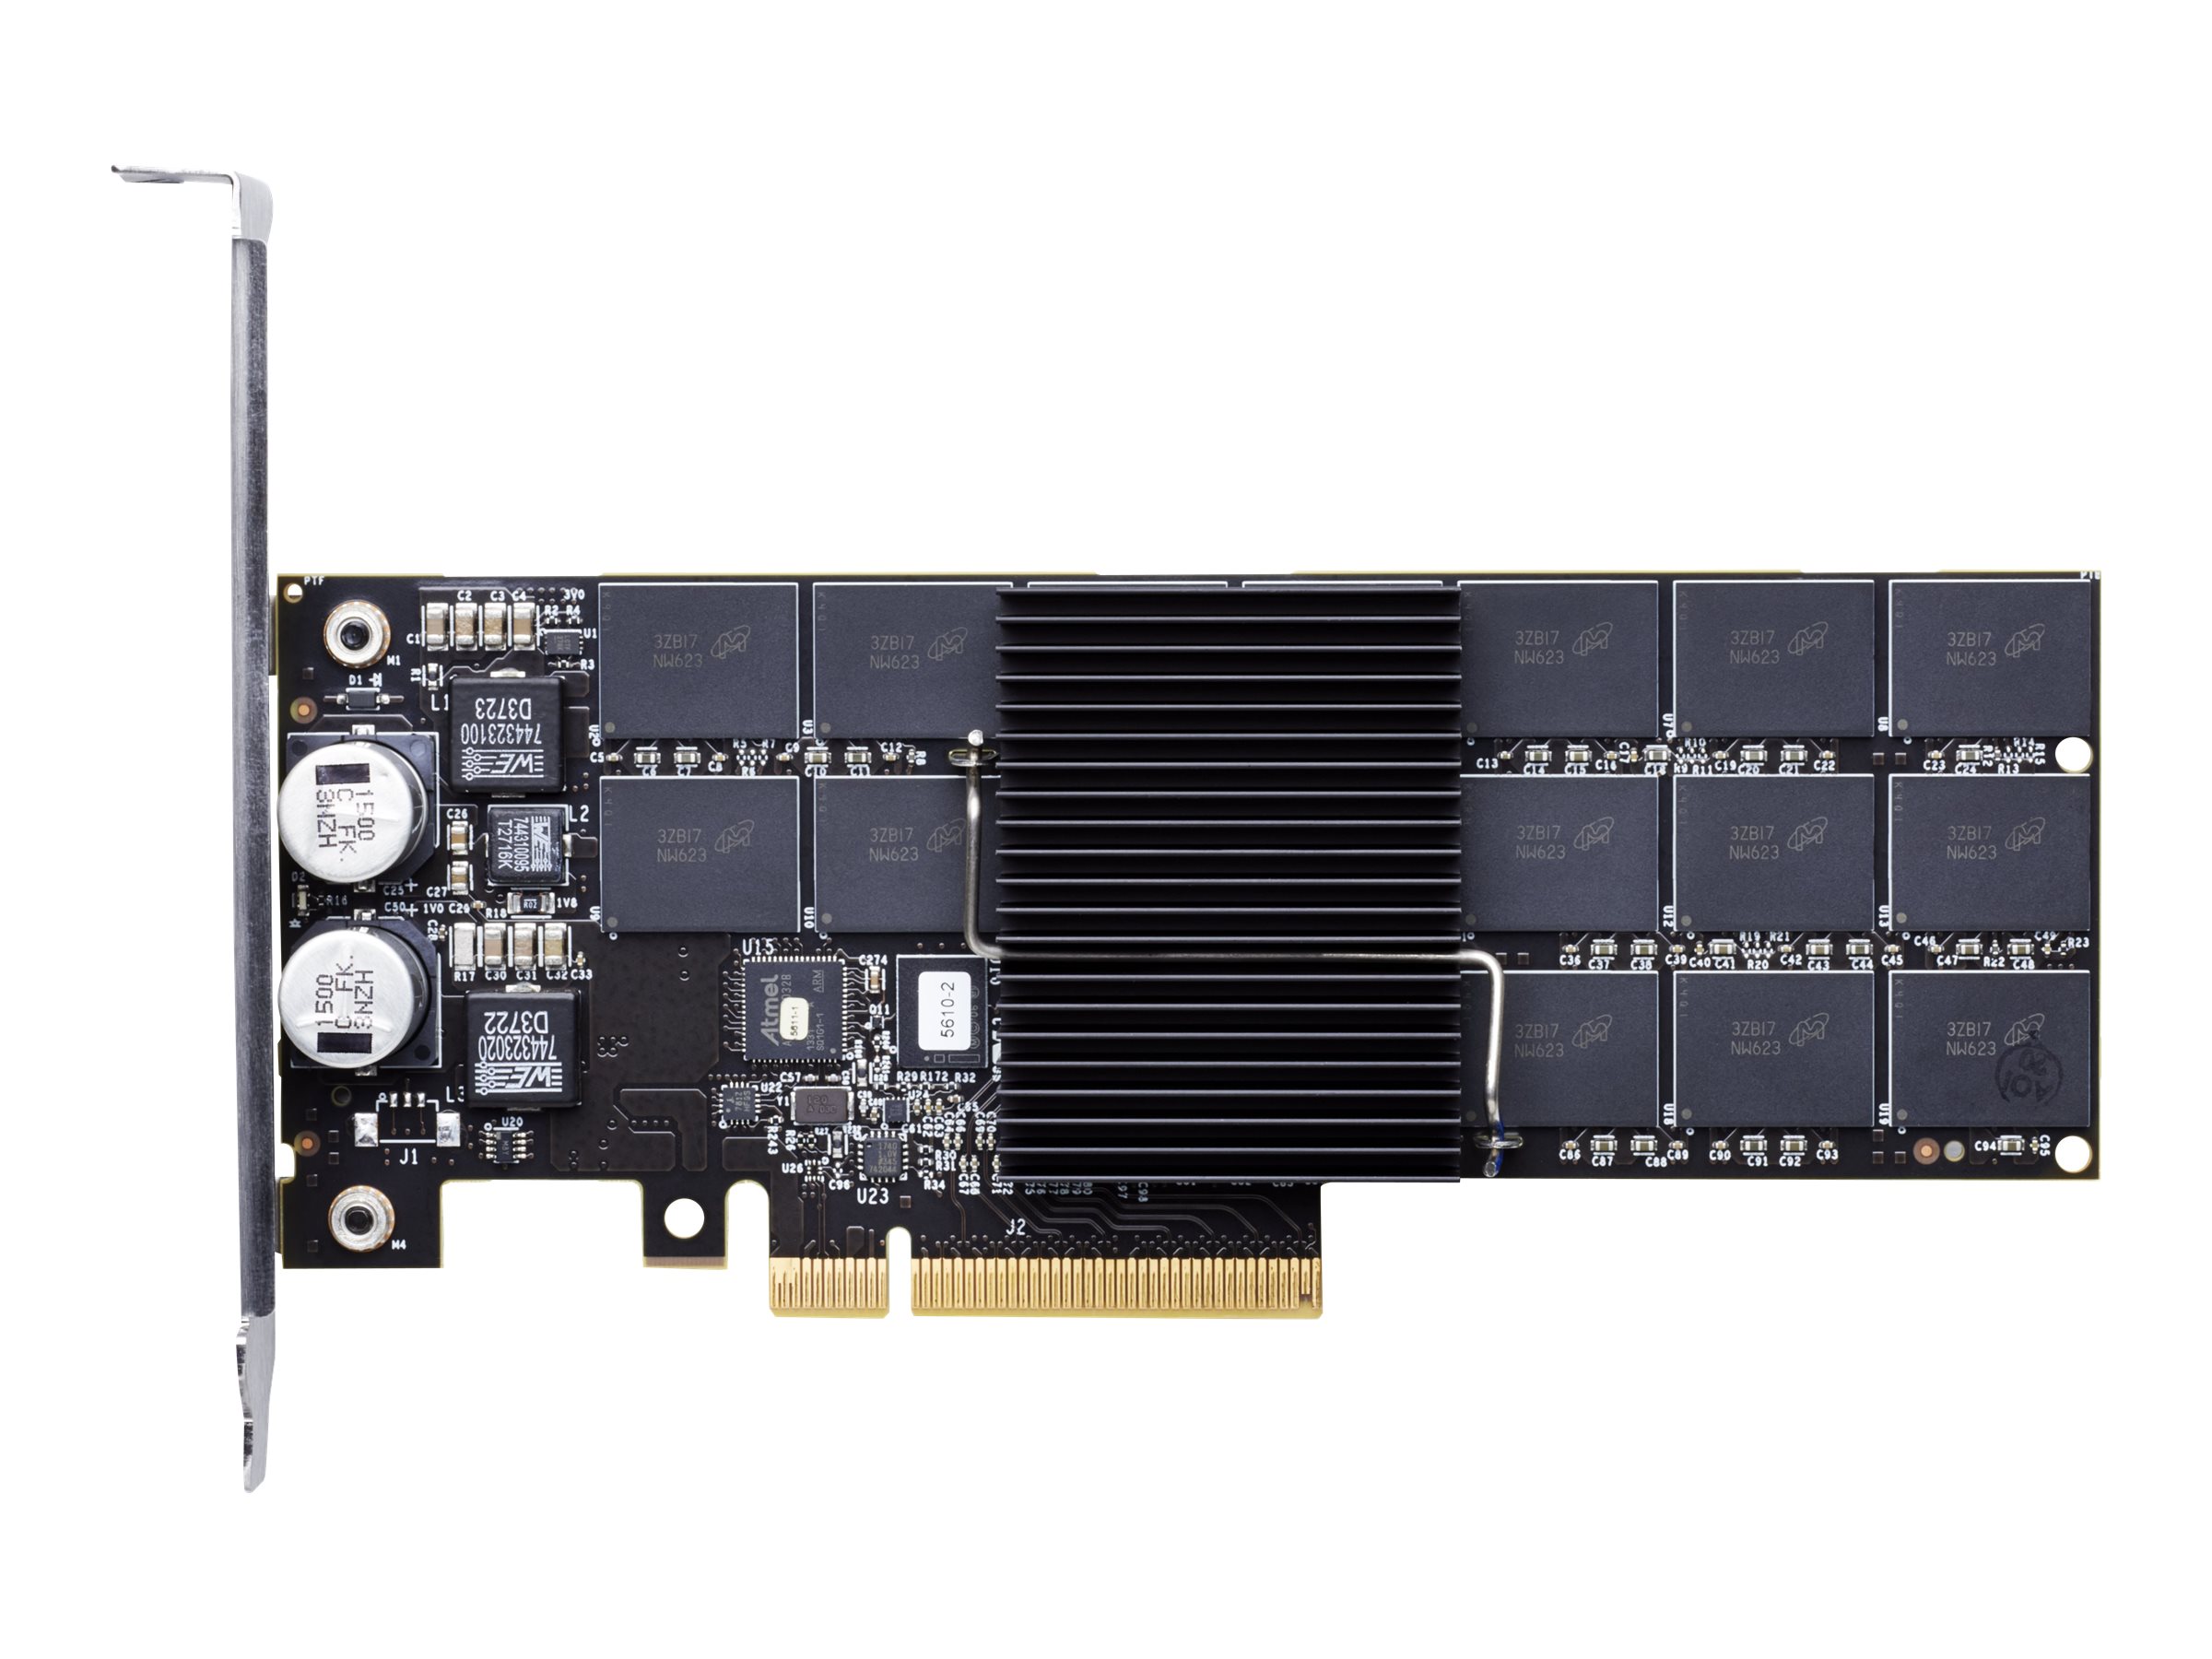 HP 1205GB MLC G2 PCIe IO Accelerator (673646-B21) - REFURB